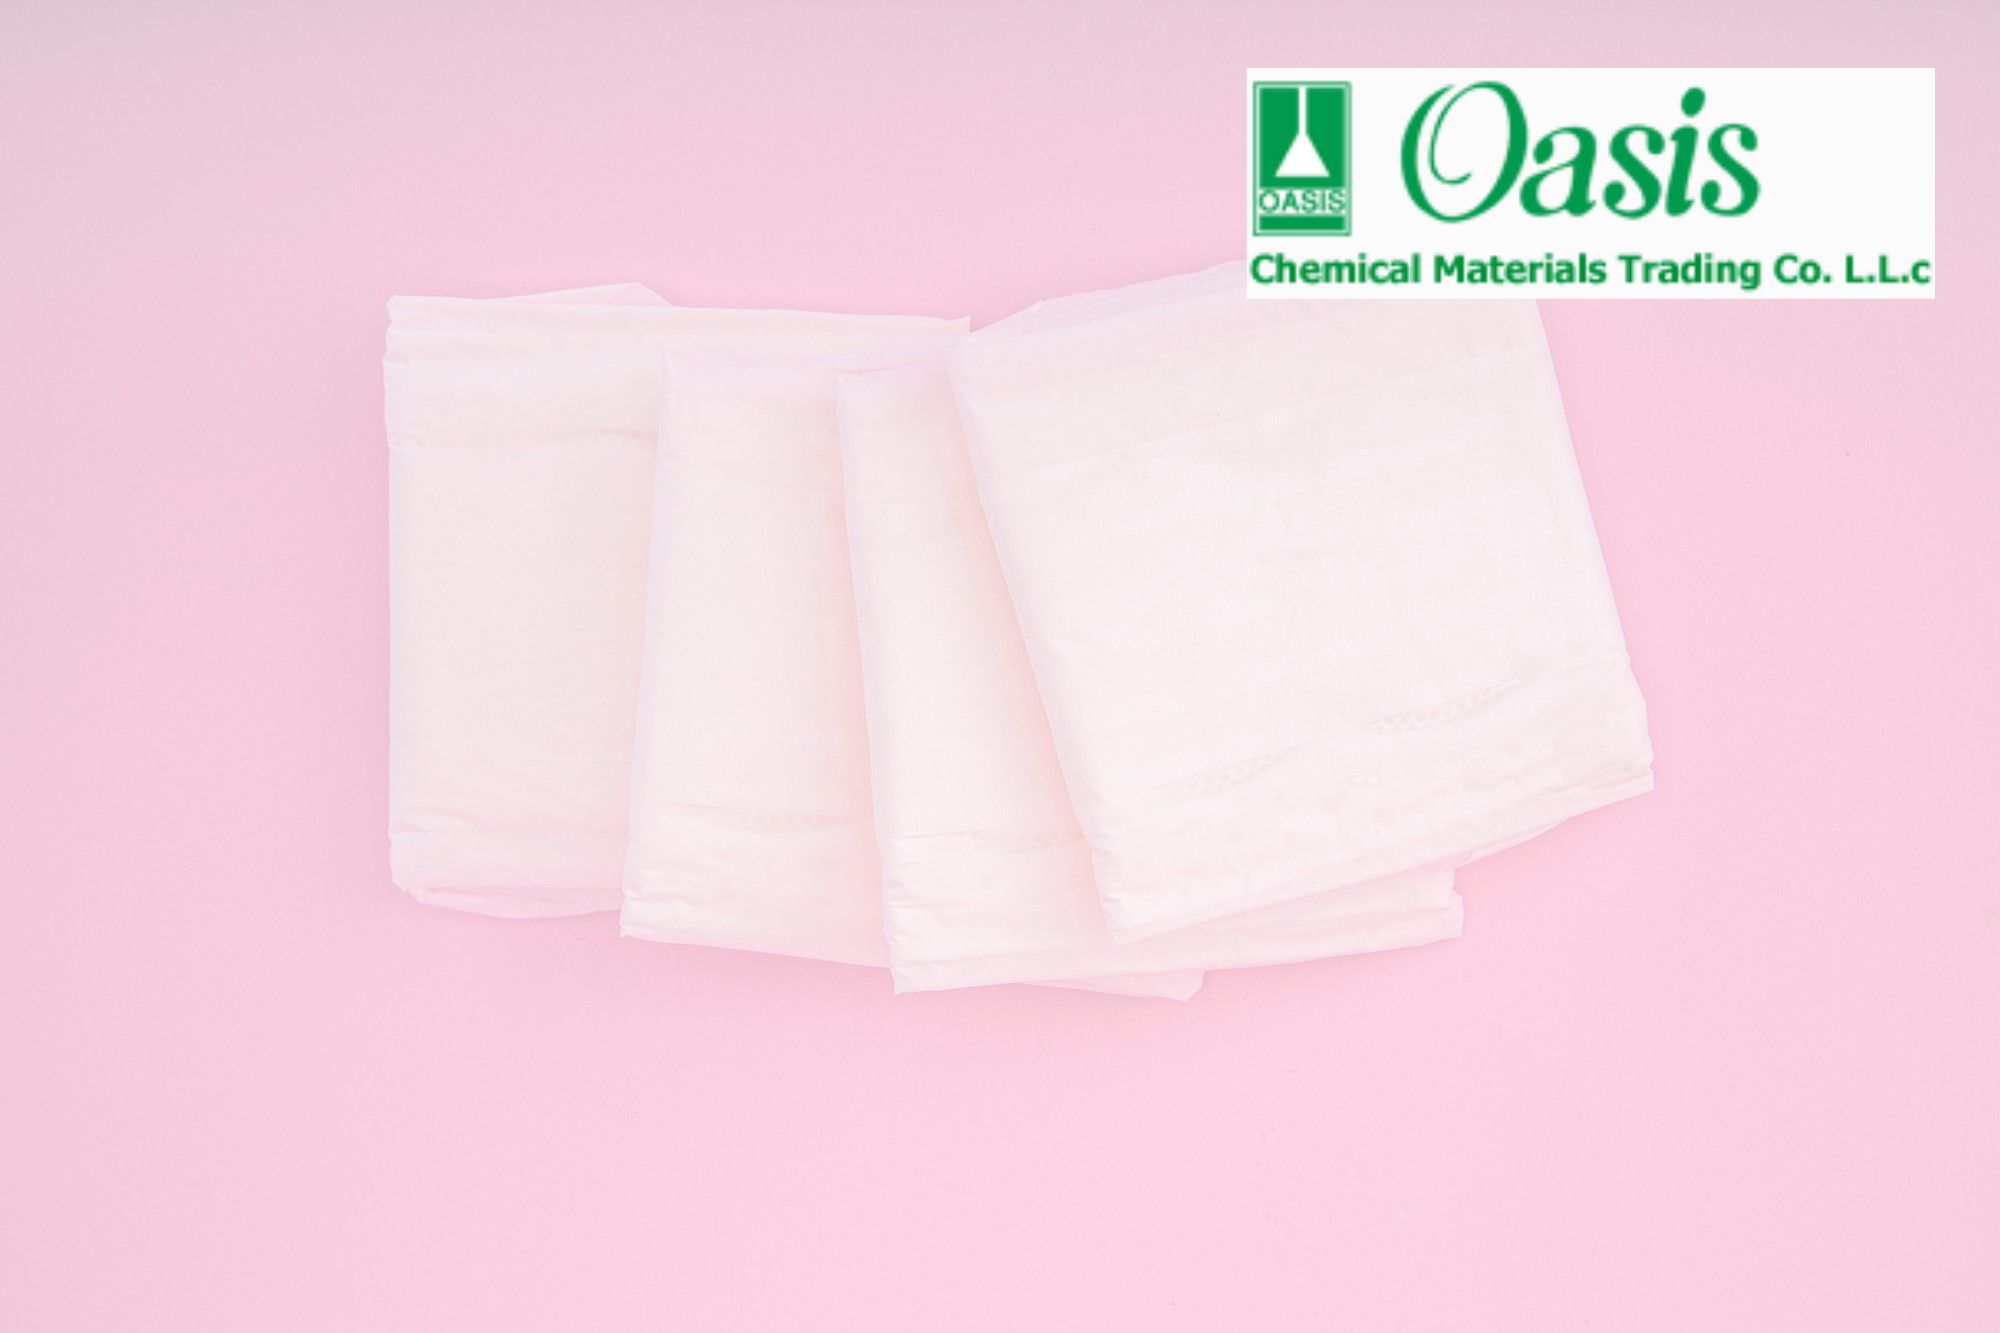 c-fold towels, c-fold towel uses, oasis chemical